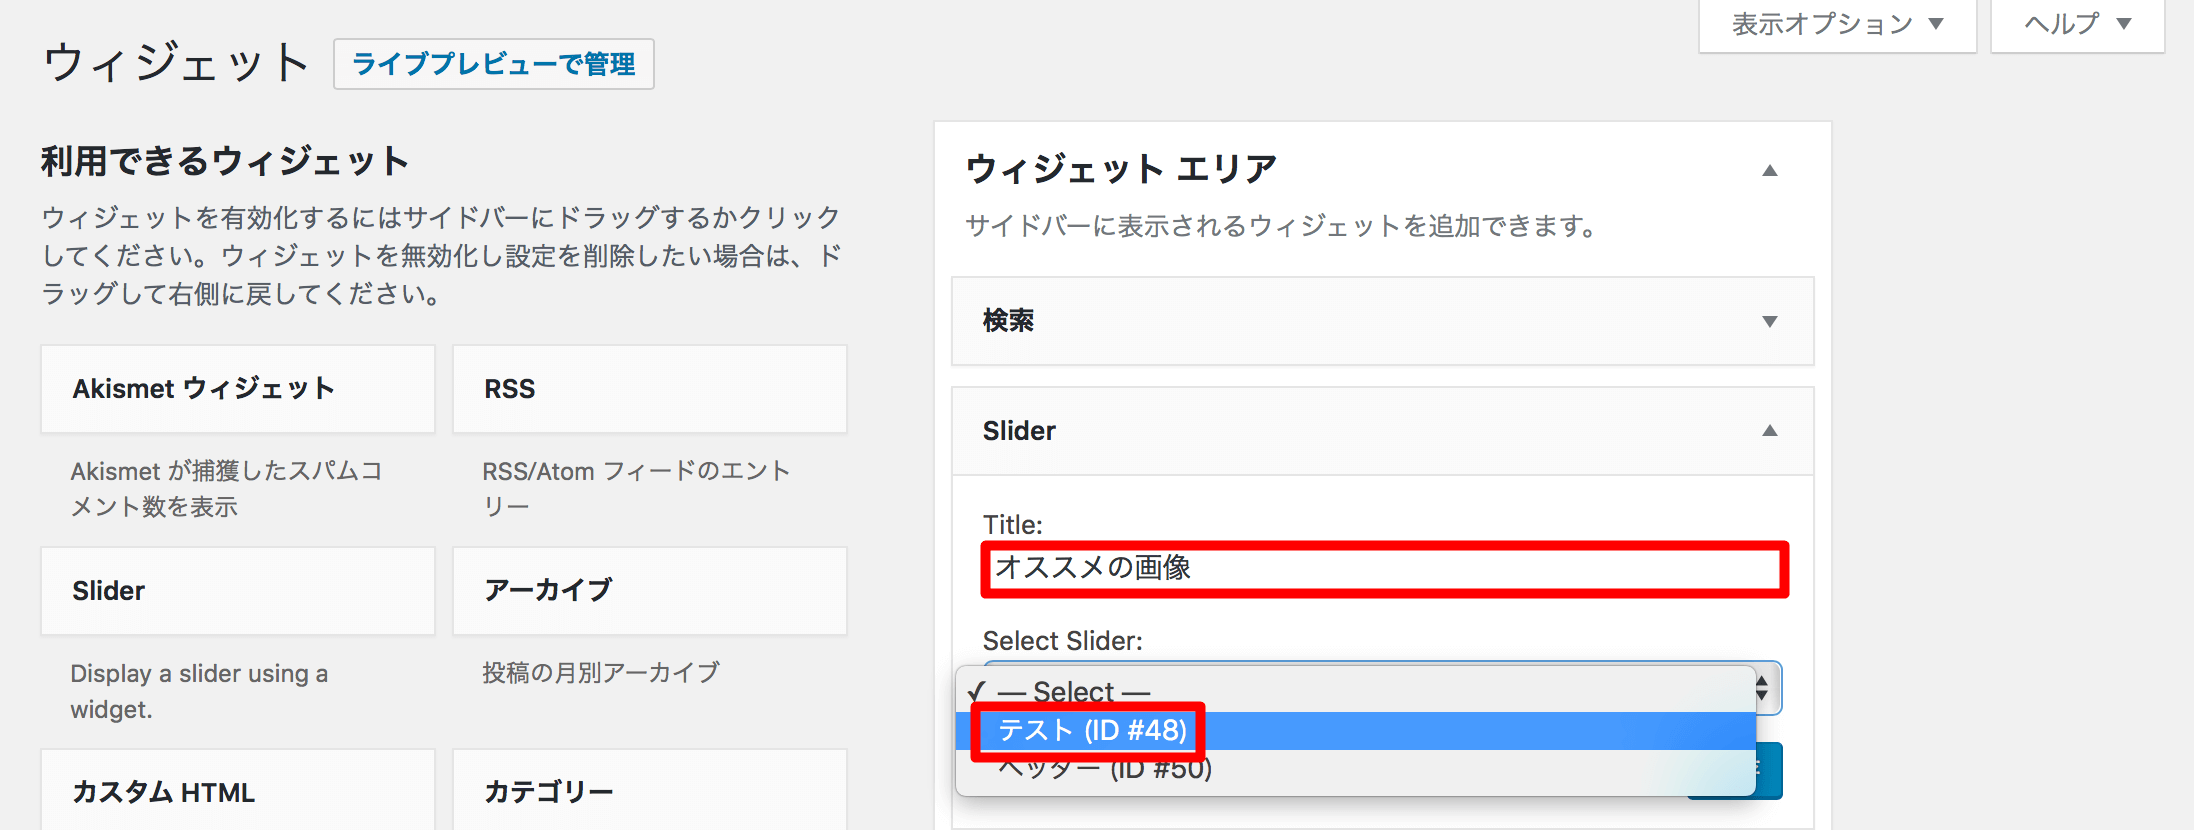 select-slider